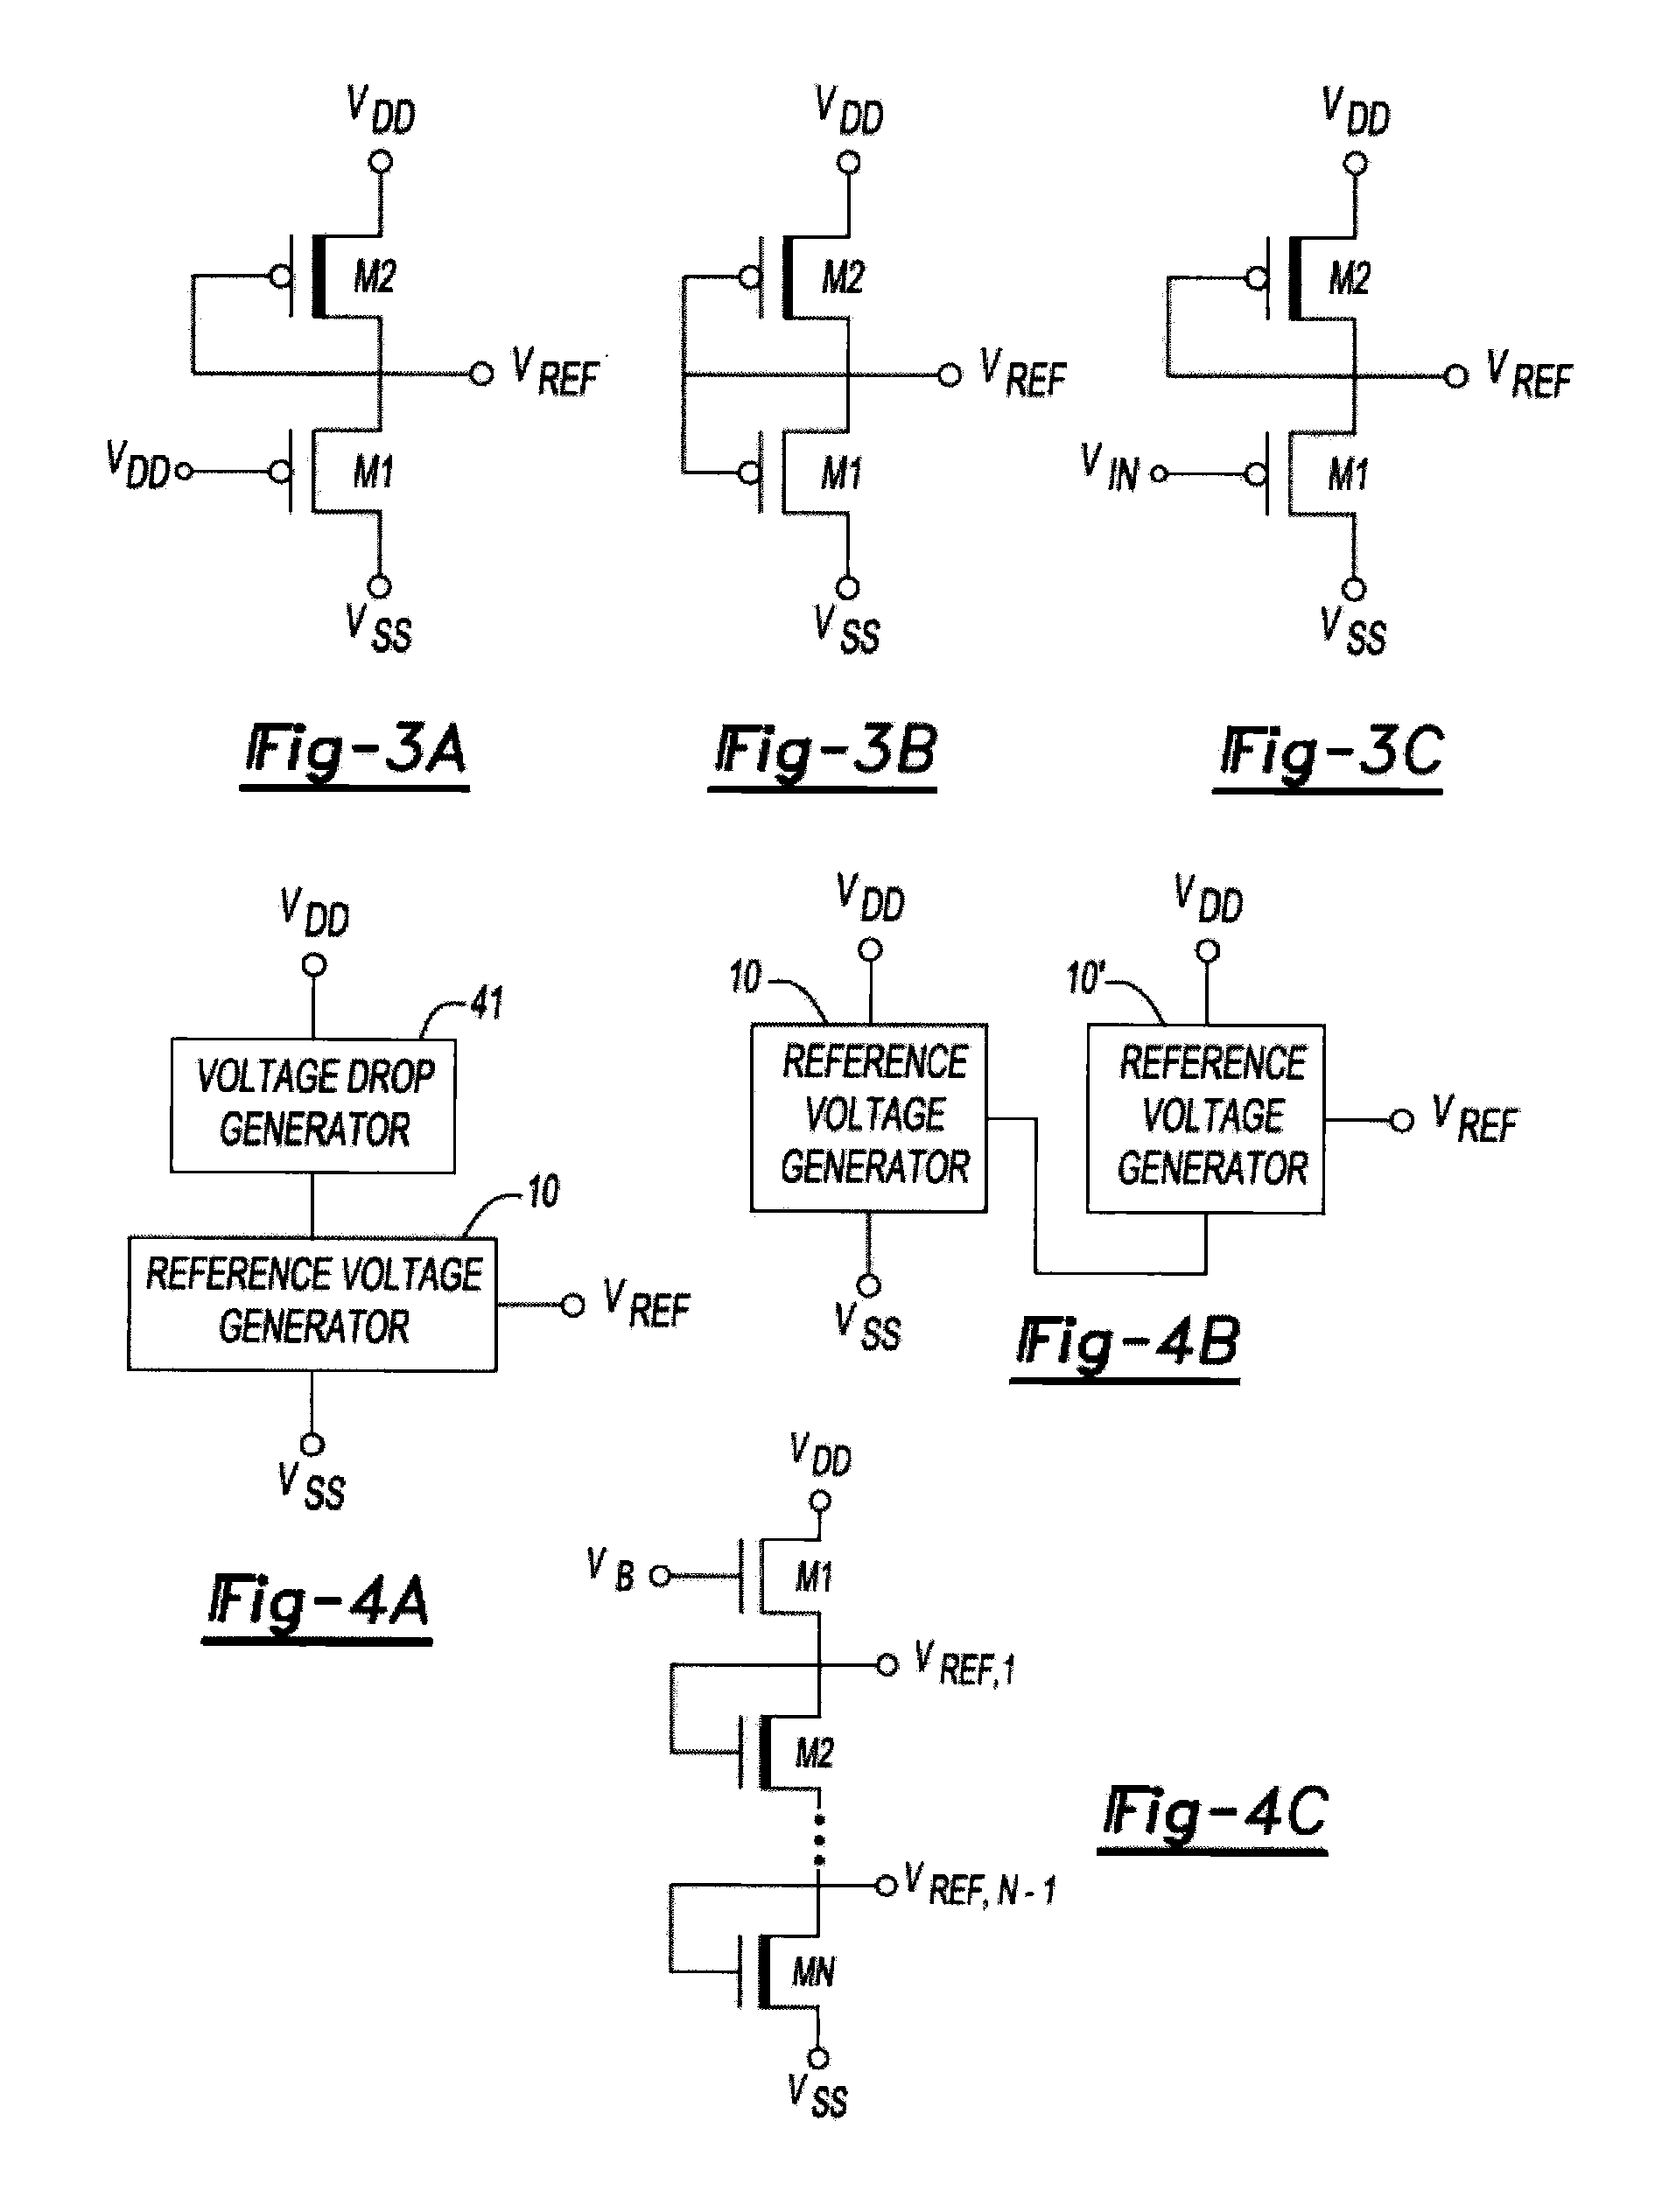 Reference voltage generator having a two transistor design